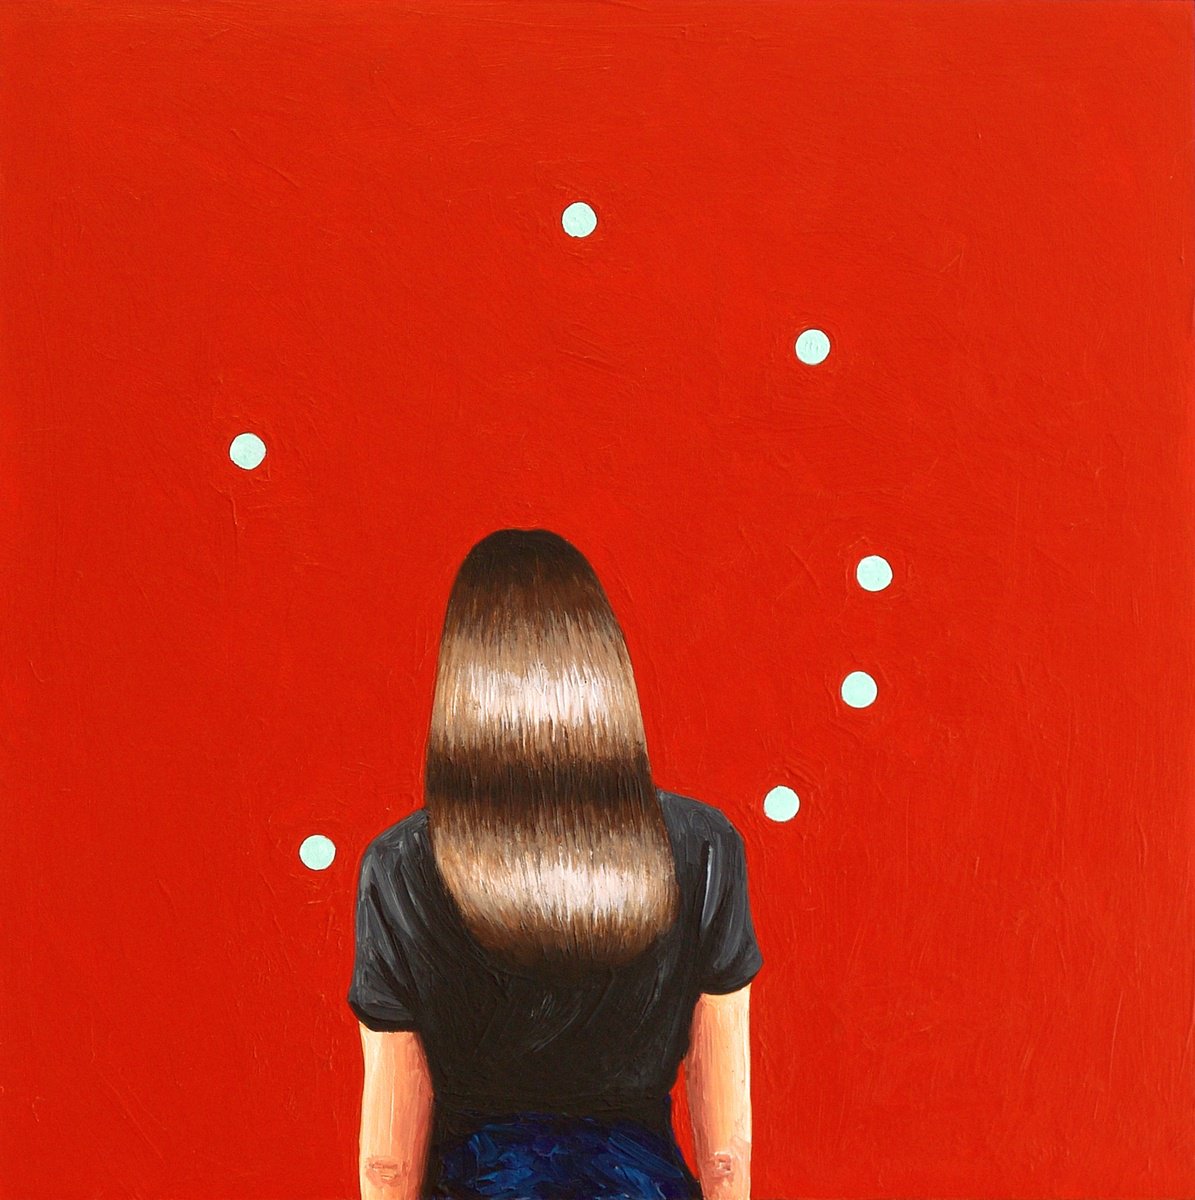 Dots by Gerard Boersma